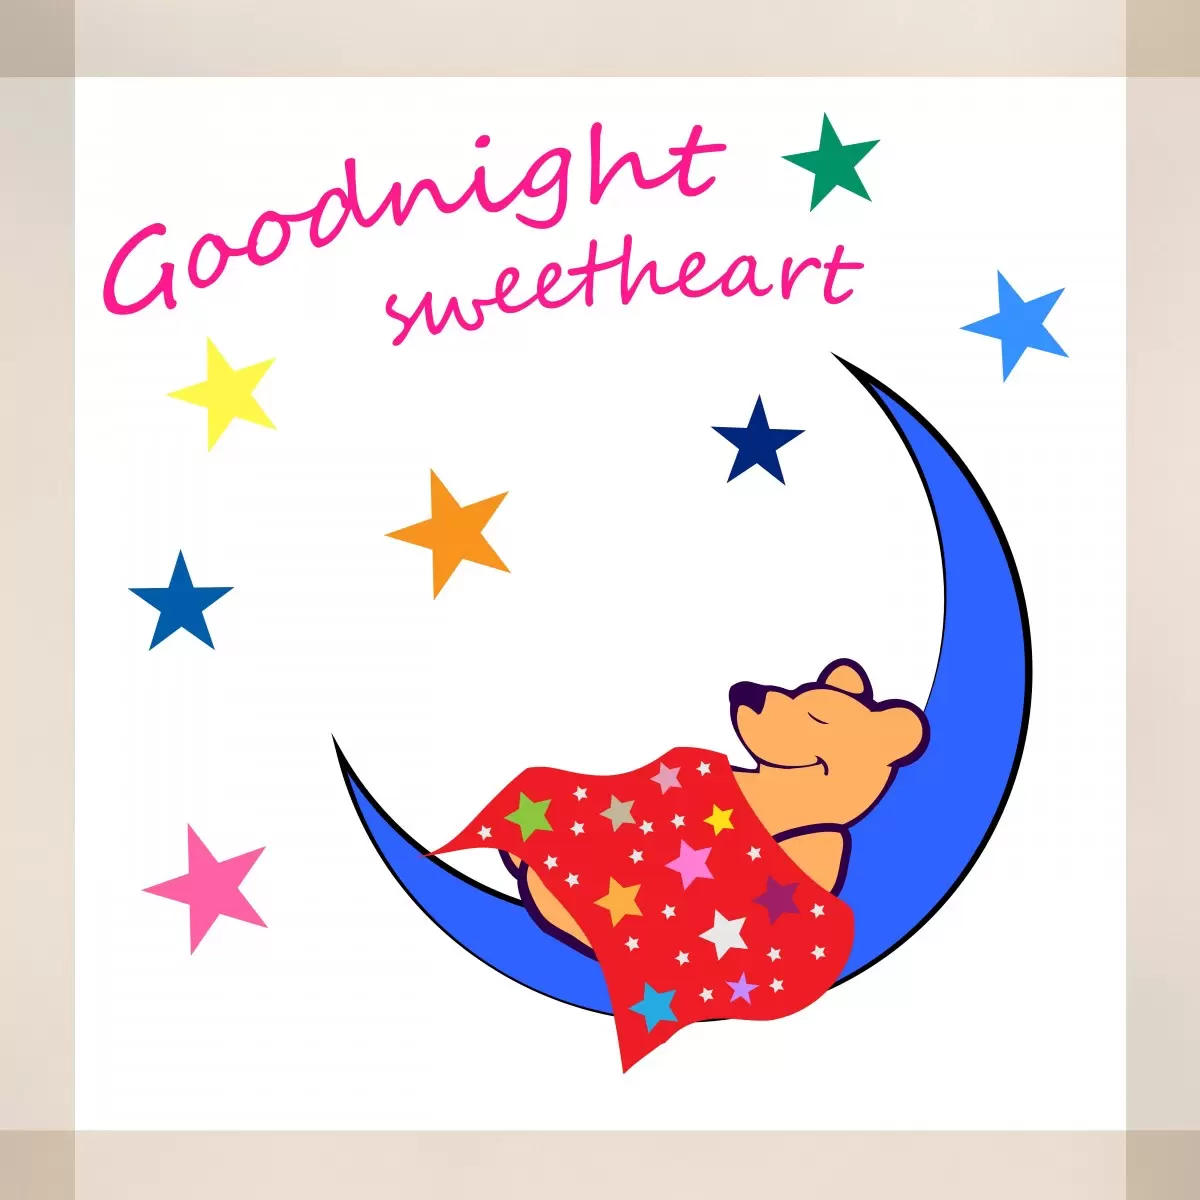 Sleeping Bear - מסגרת עיצובים - תמונות לחדרי תינוקות  - מק''ט: 241139